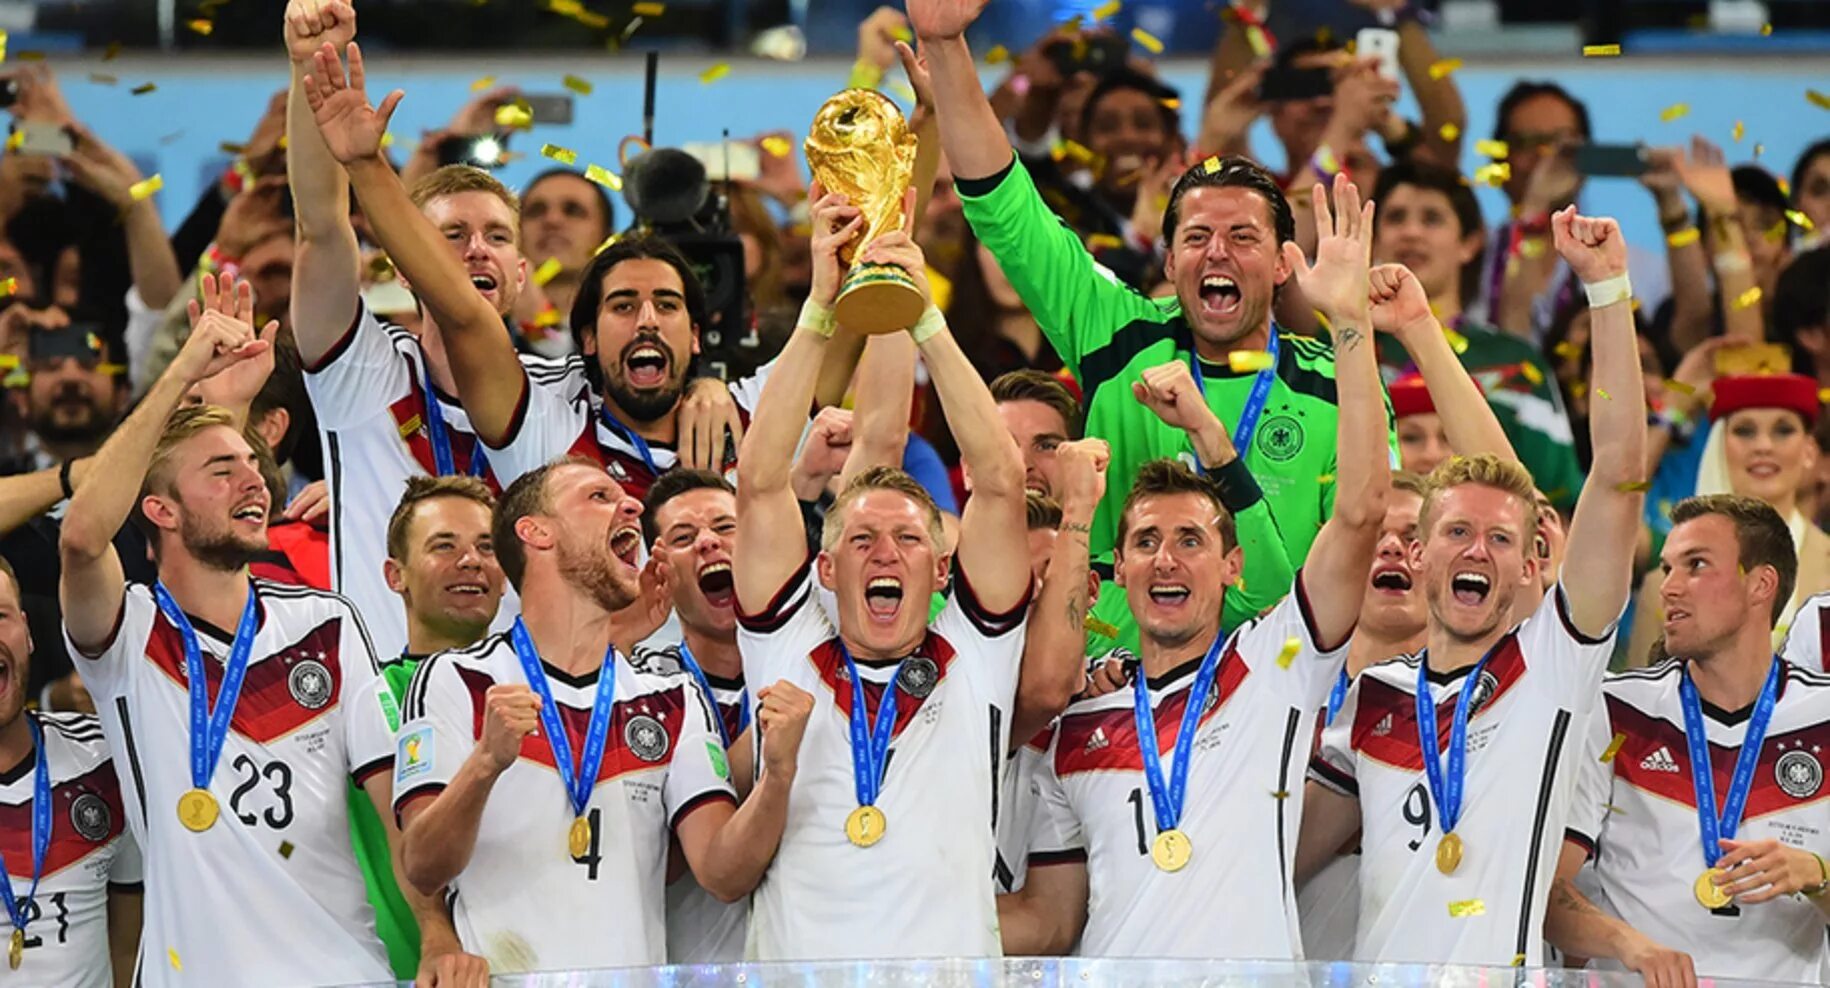 Германия 2014 футбол World Cup. Германия чемпион 2014.